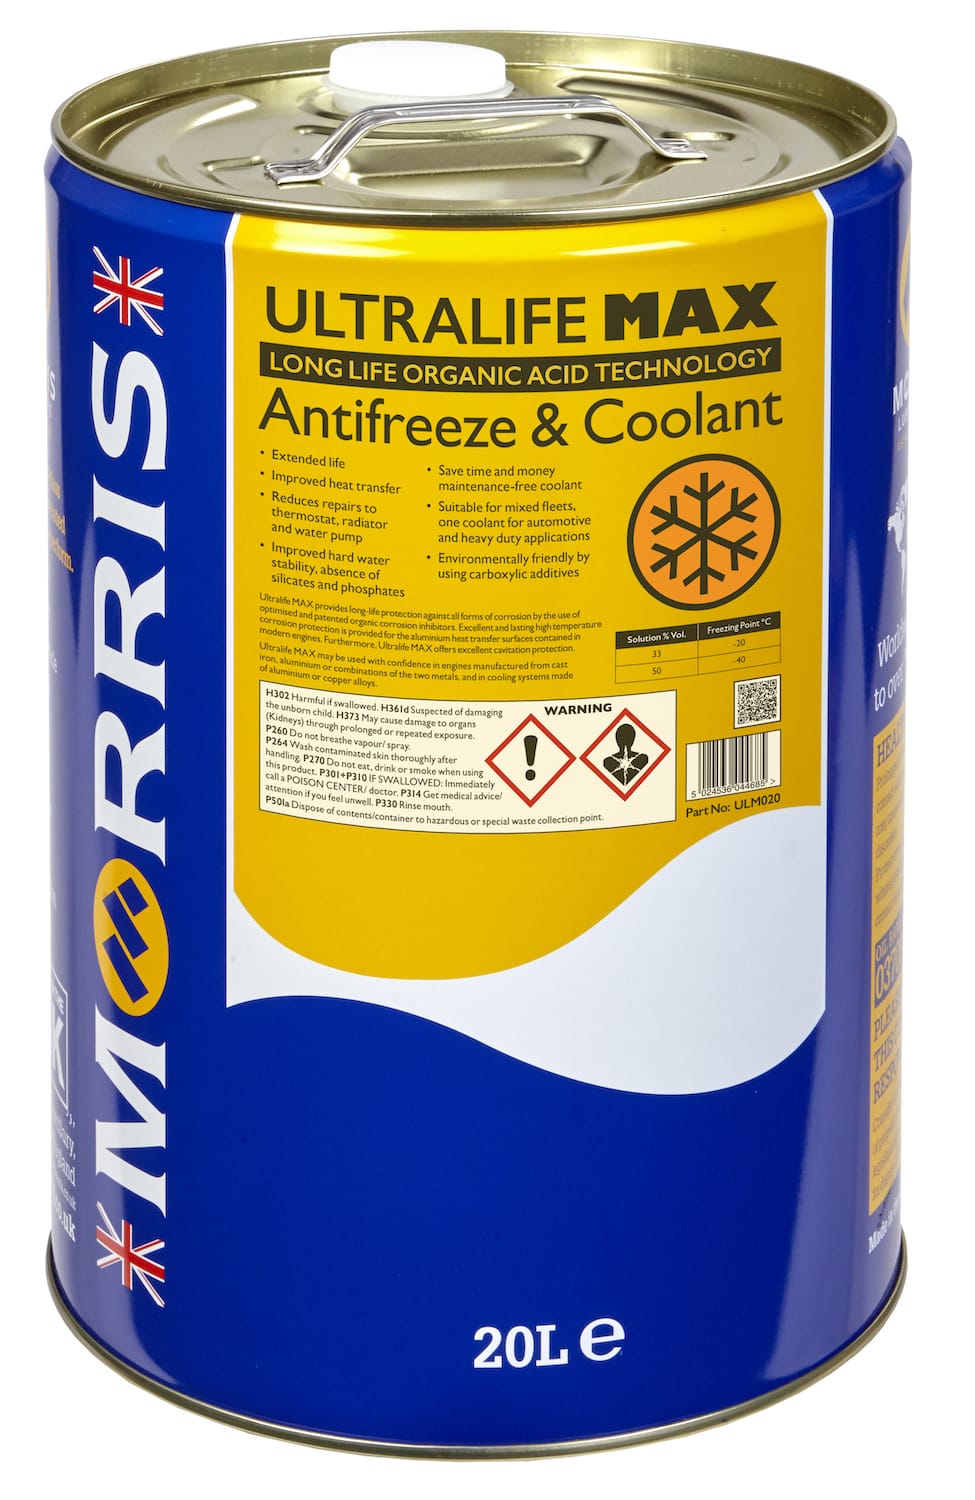 Ultralife Max Antifreeze